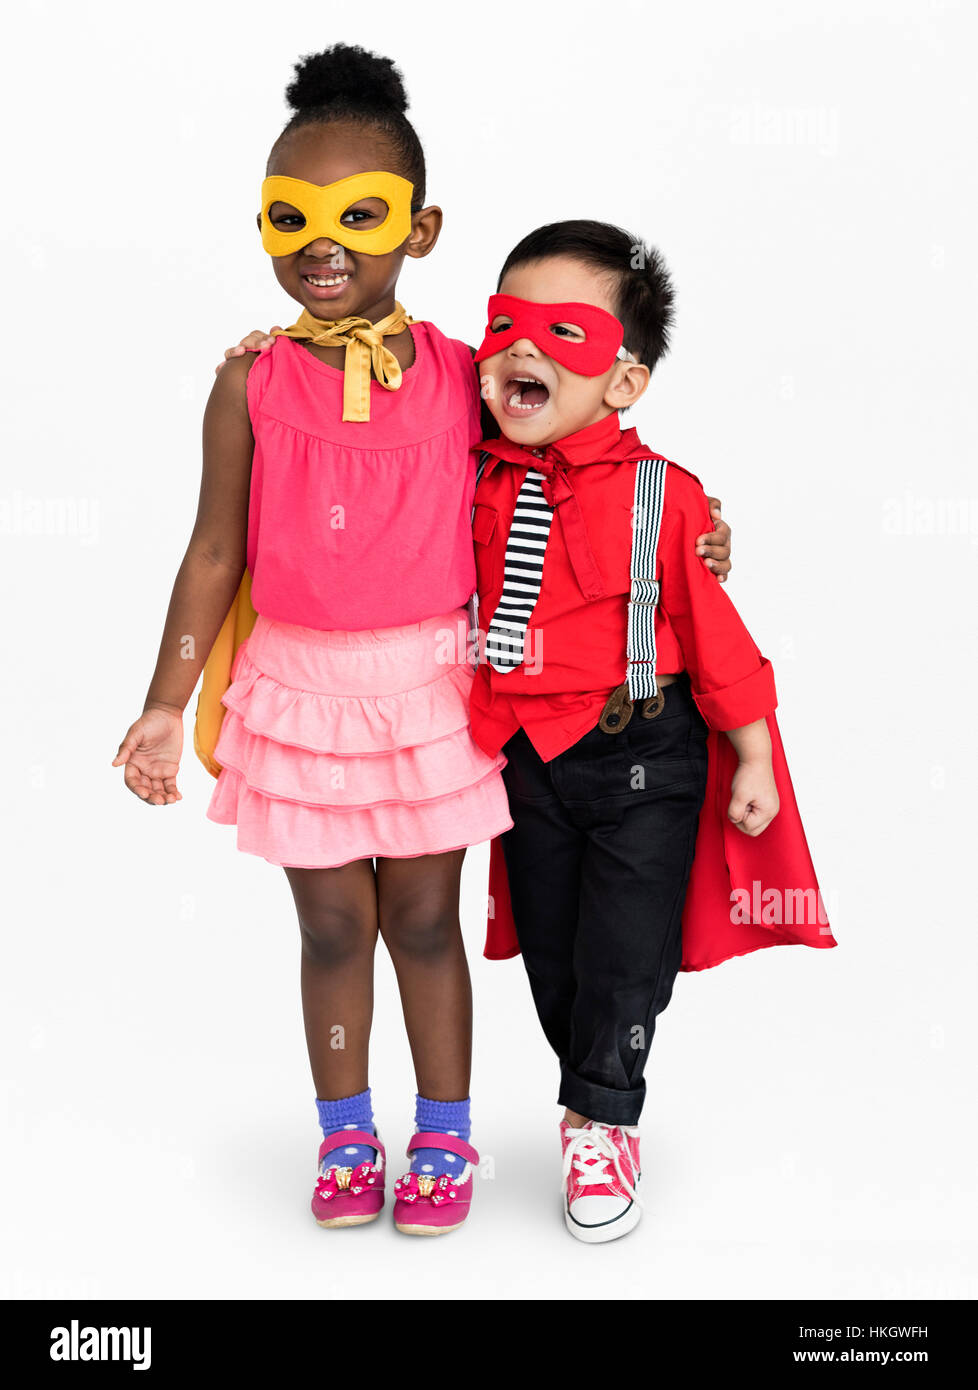 Disfraz de niña carnaval fotografías e imágenes de alta resolución - Alamy